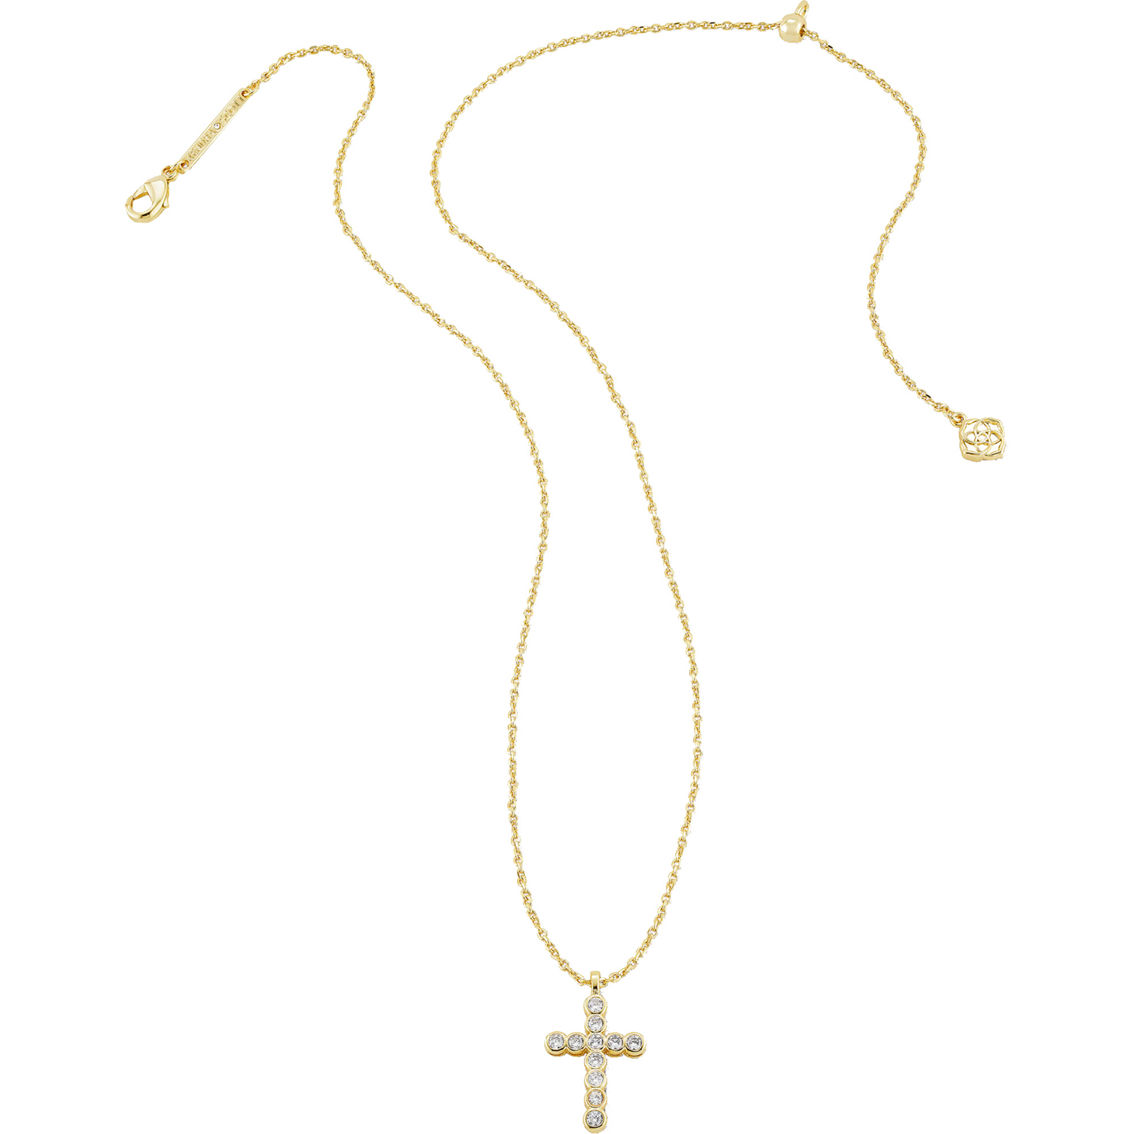 Kendra Scott Cross Crystal Pendant Necklace - Image 2 of 2